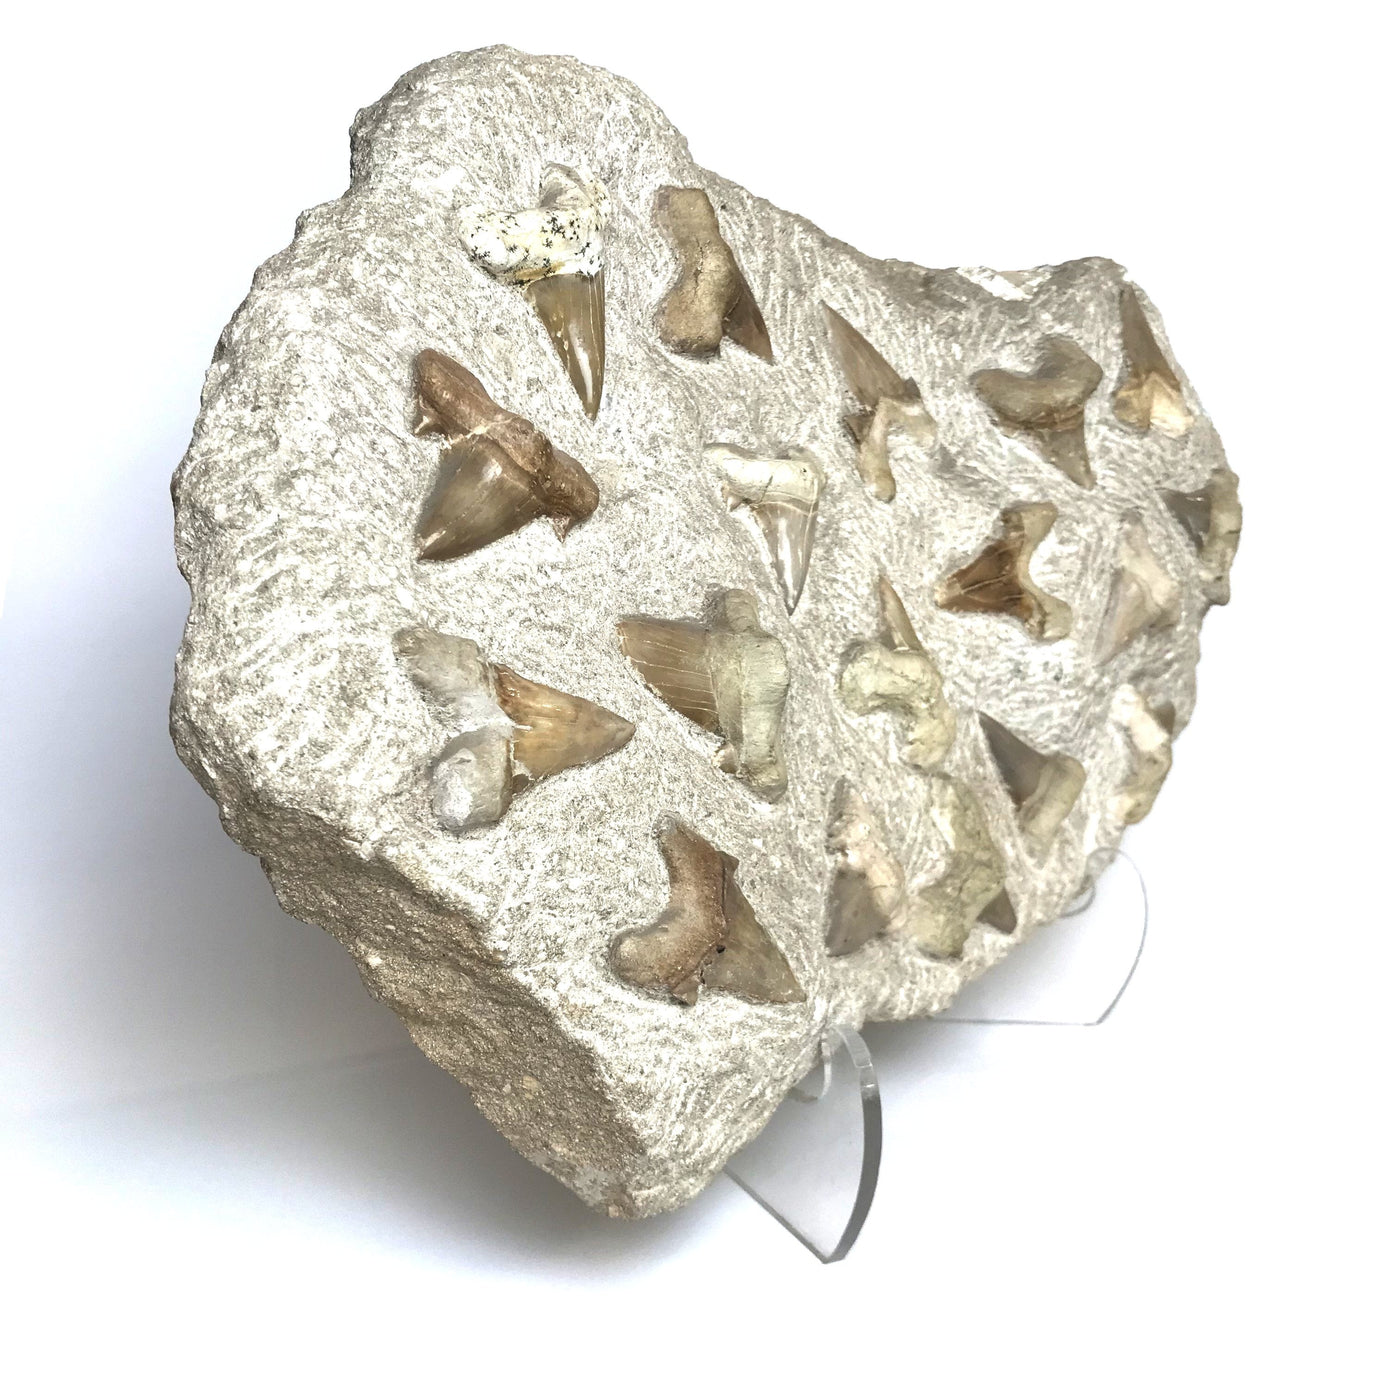 Fossilized Otodus/Lamna Shark Tooth Specimen in Matrix